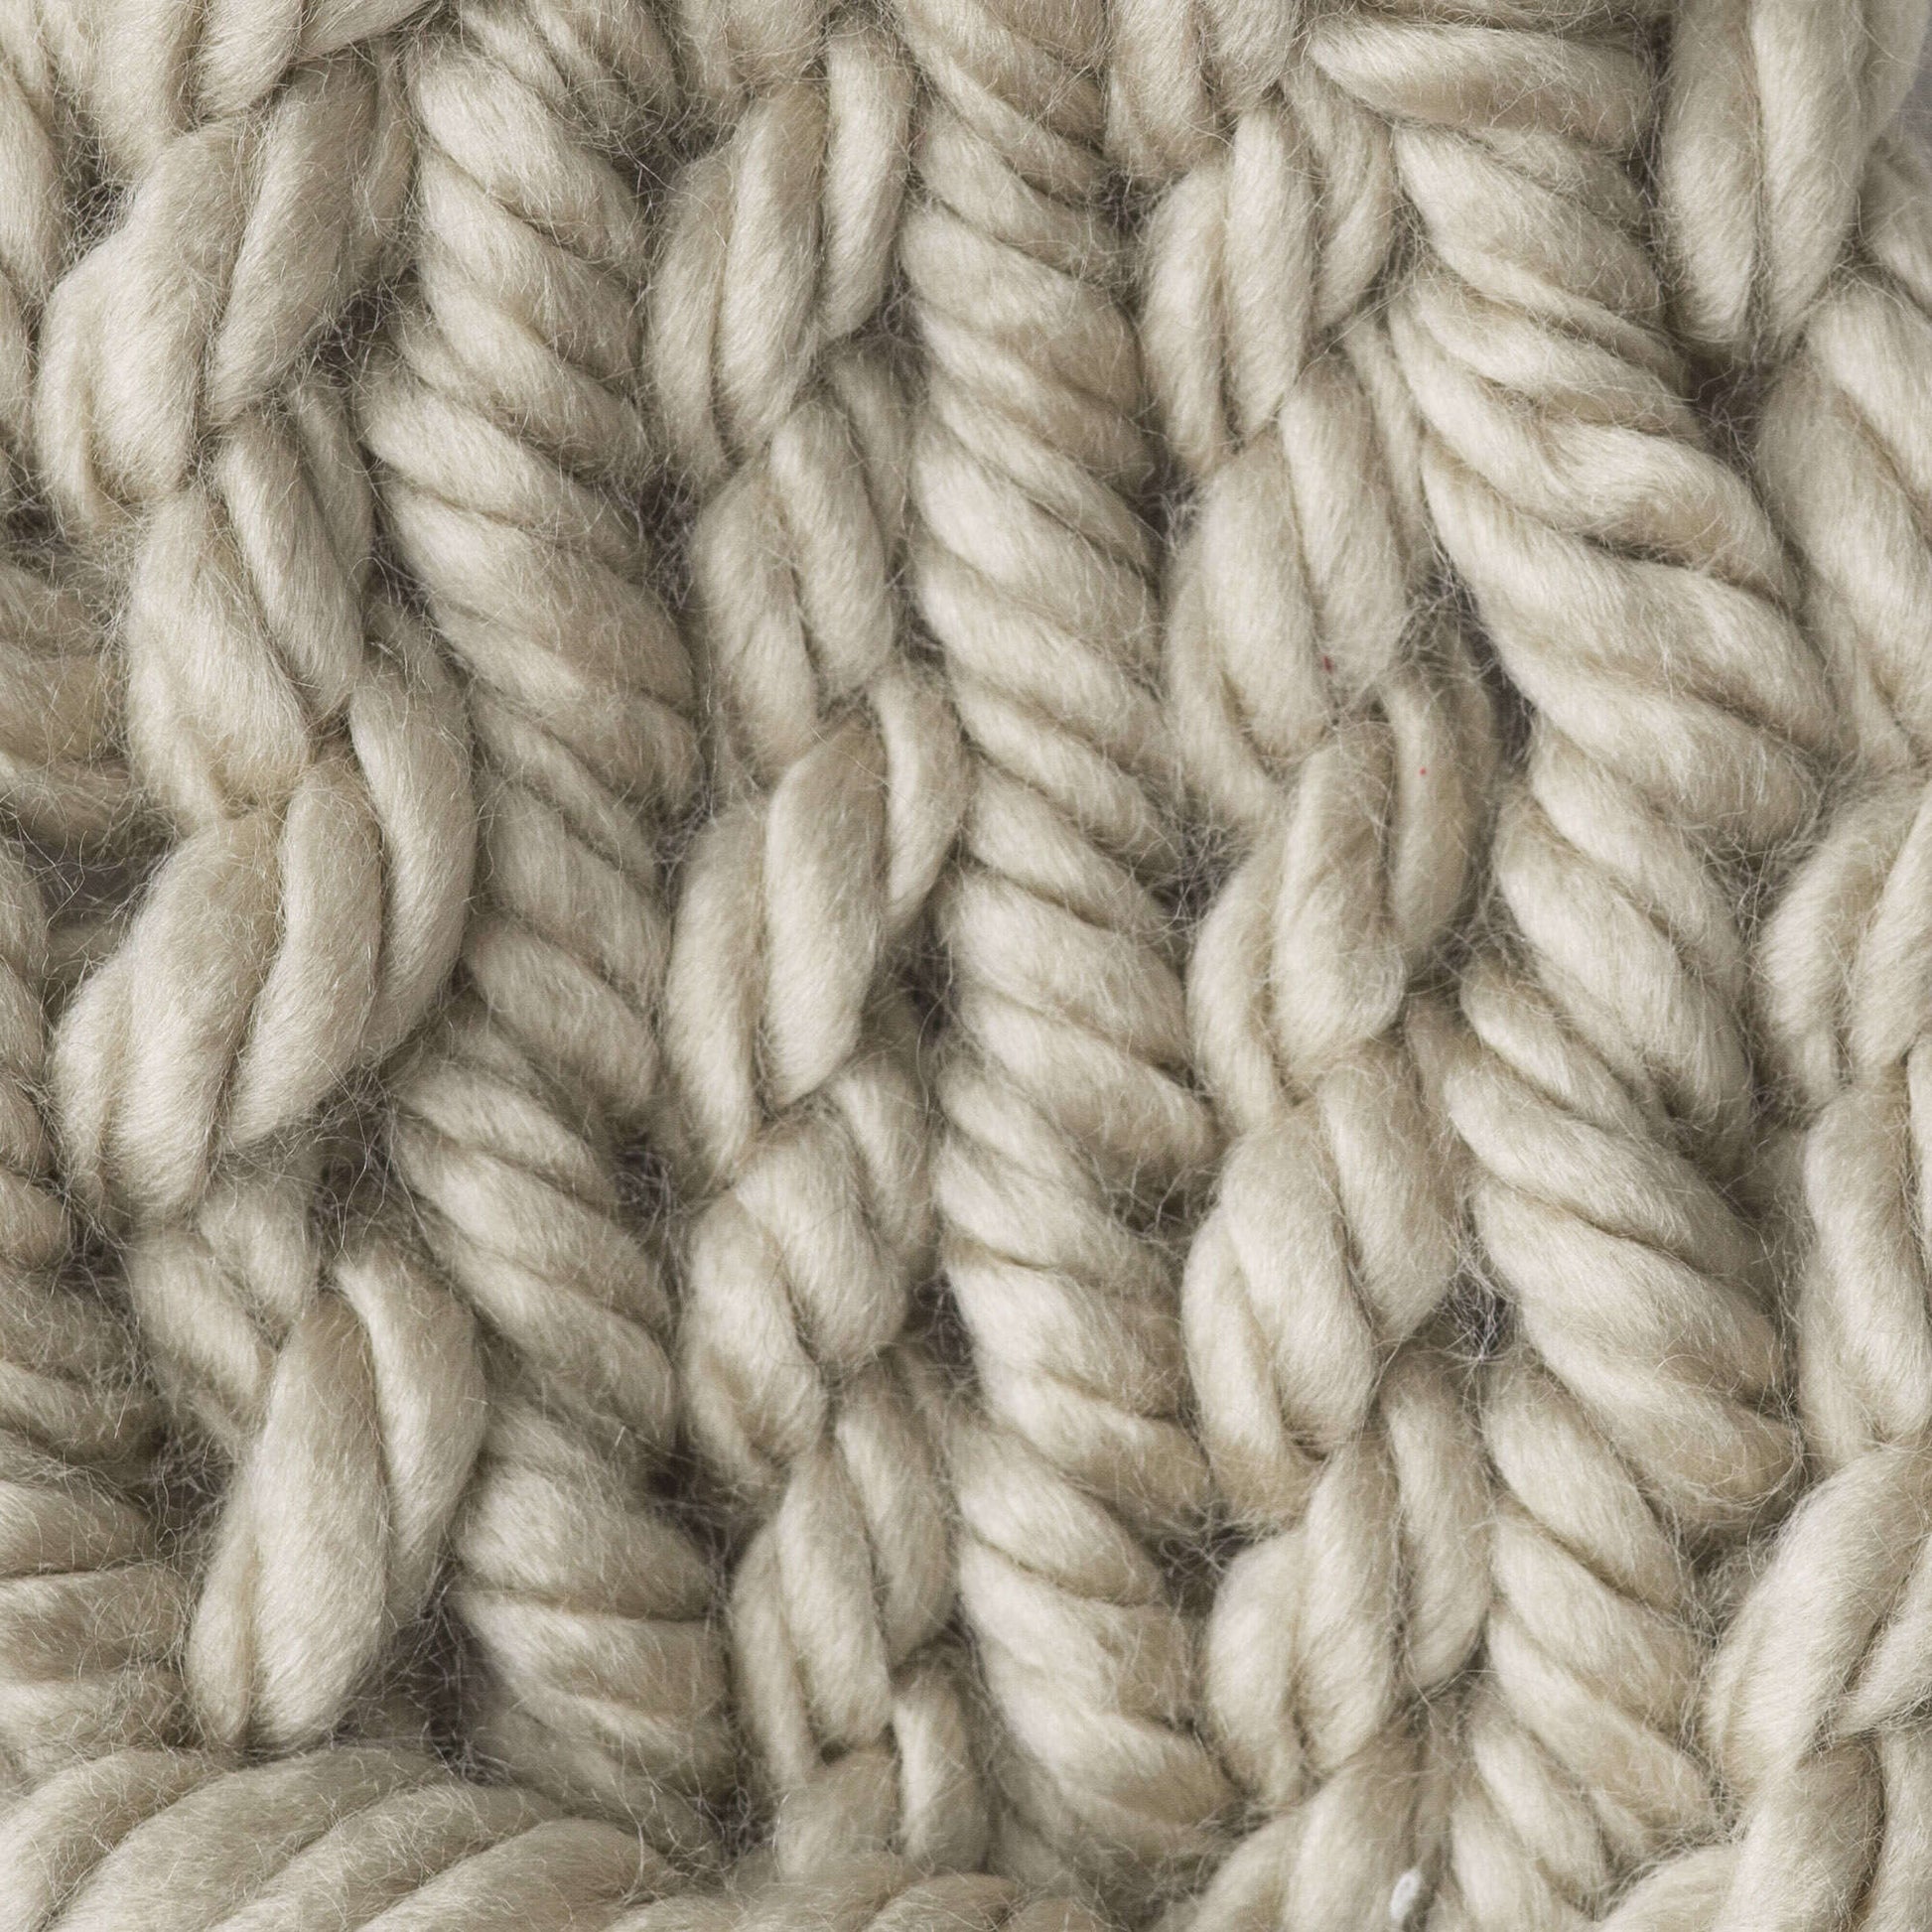 Bernat Mega Bulky Yarn - Discontinued Shades Linen